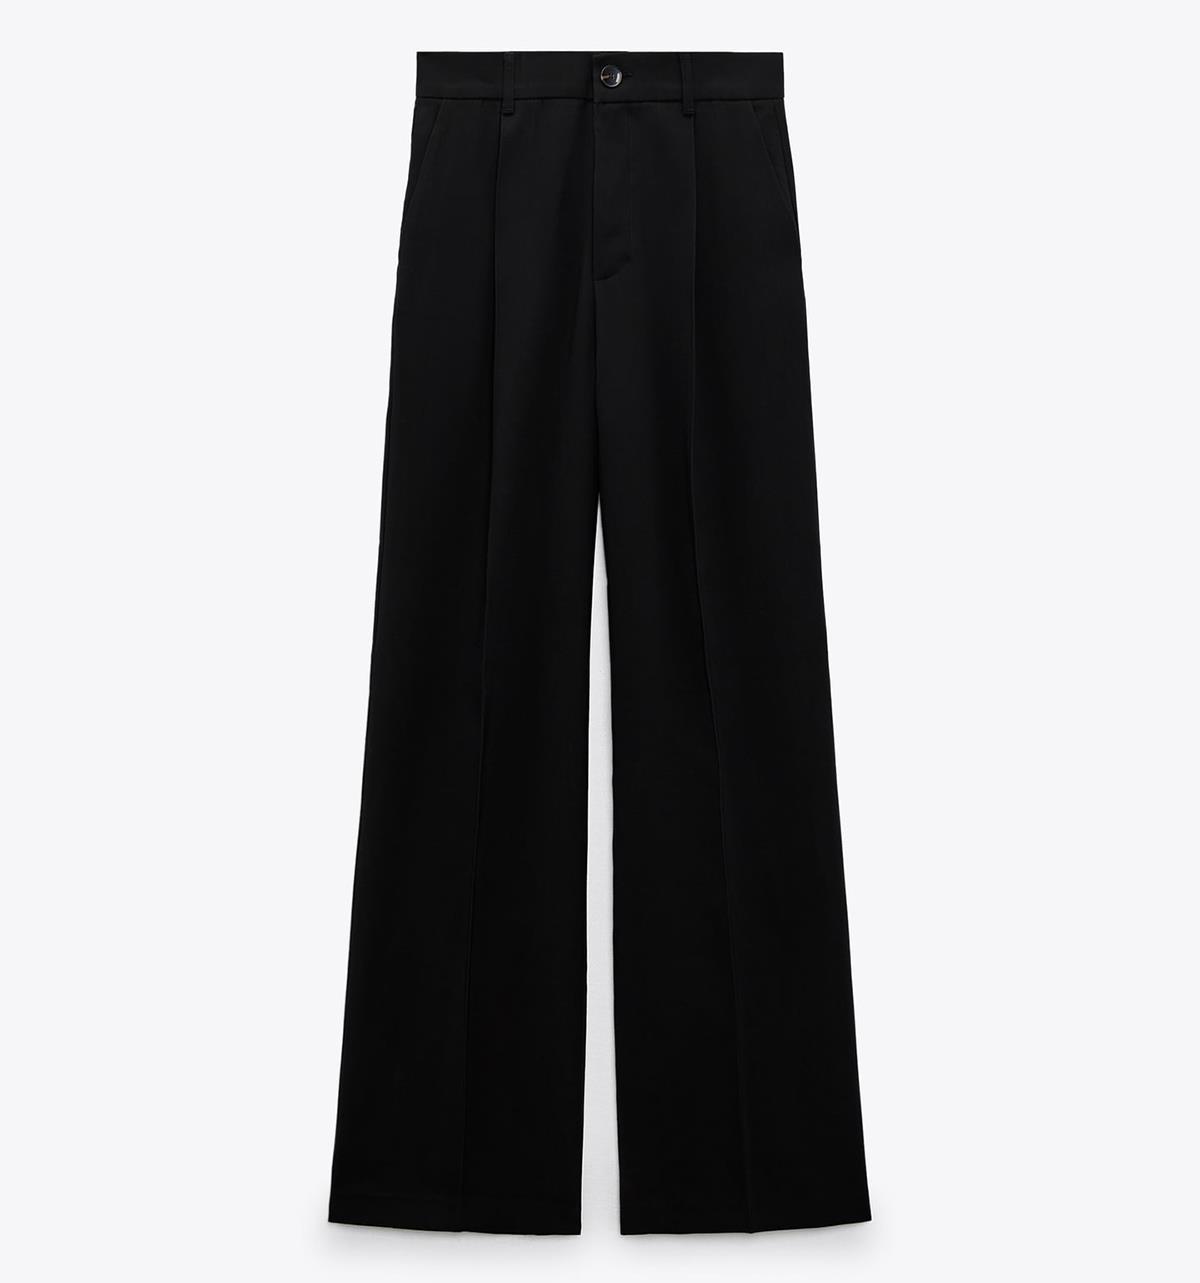 Pantalones negros Zara